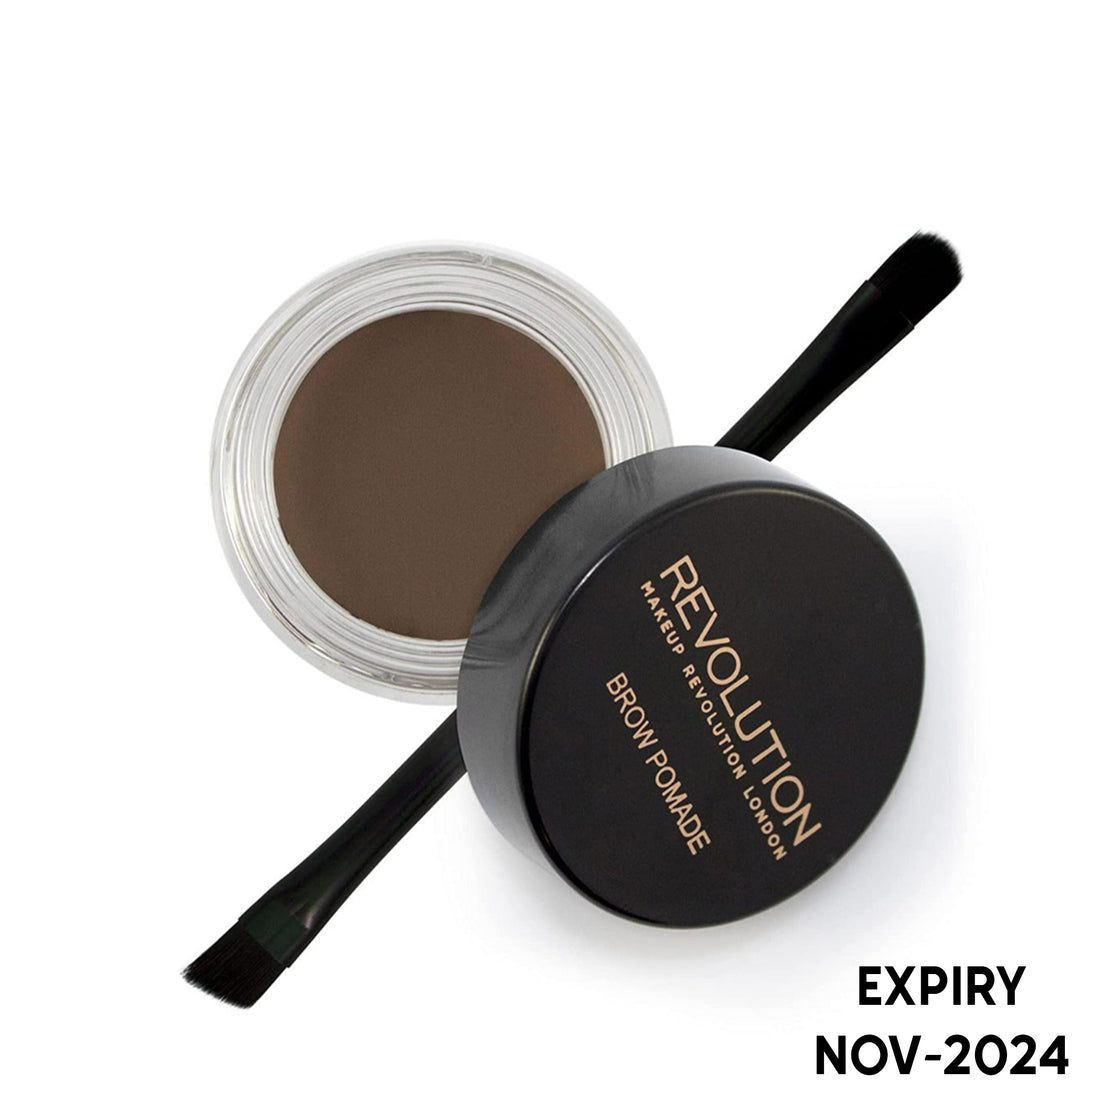 Makeup Revolution Brow Pomade Dark Brown (2.5gm)